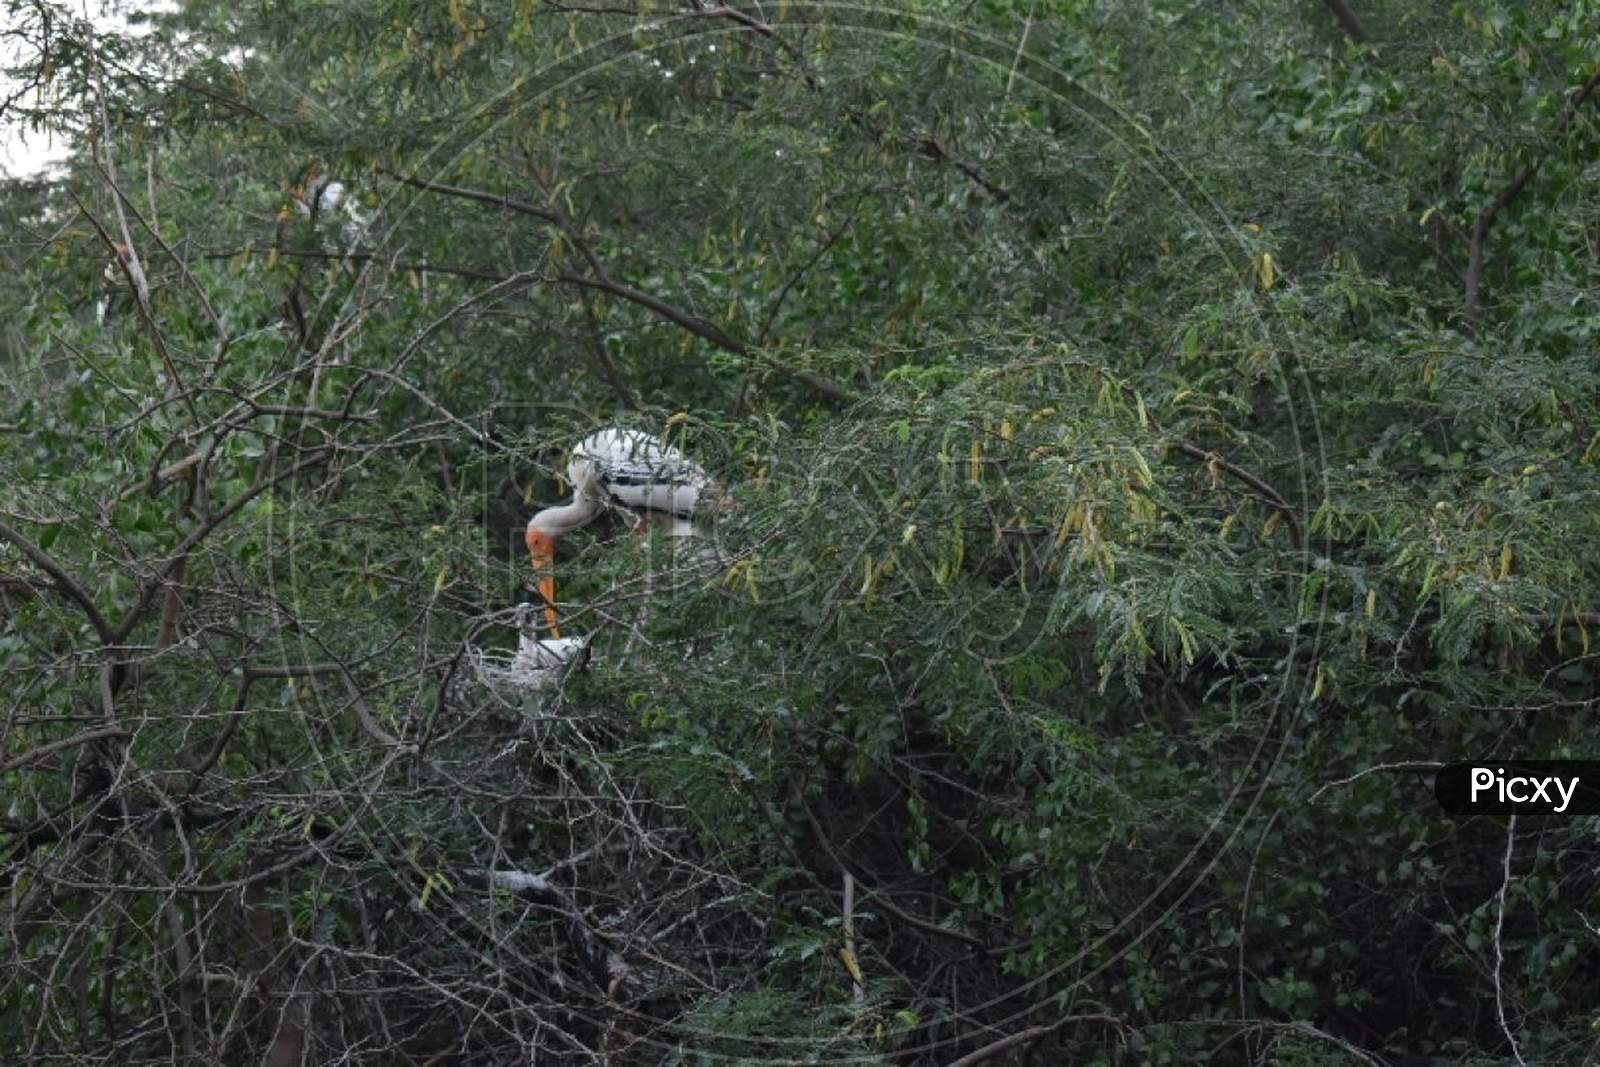 White bird in tree